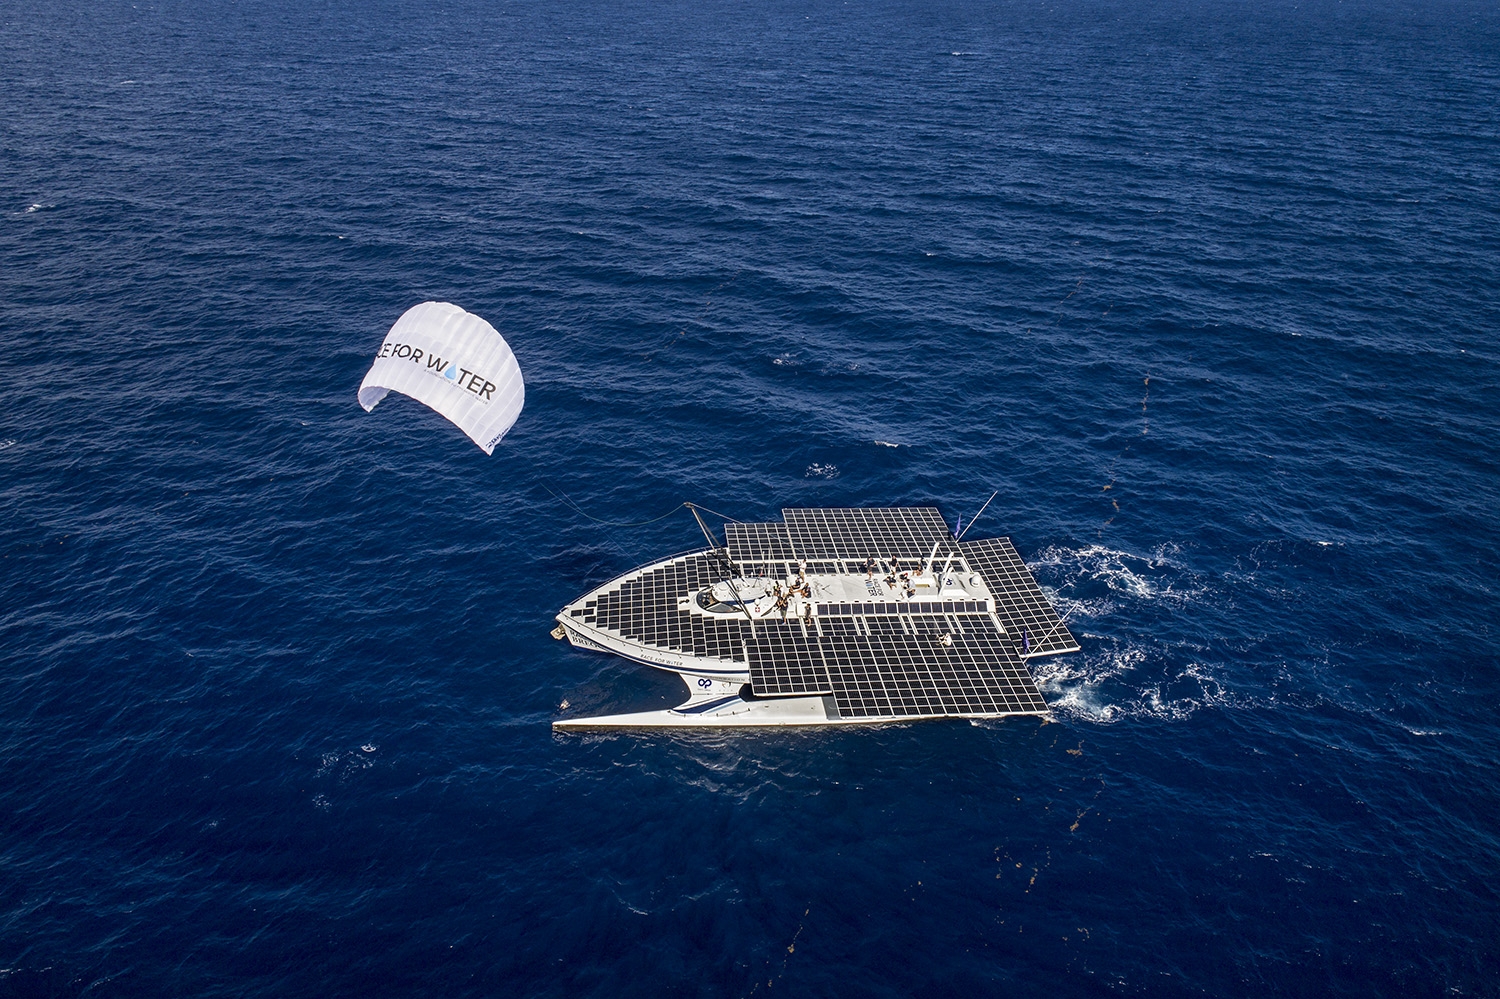  Race for Water  The SolarCatamaran underway with Kite propulsion